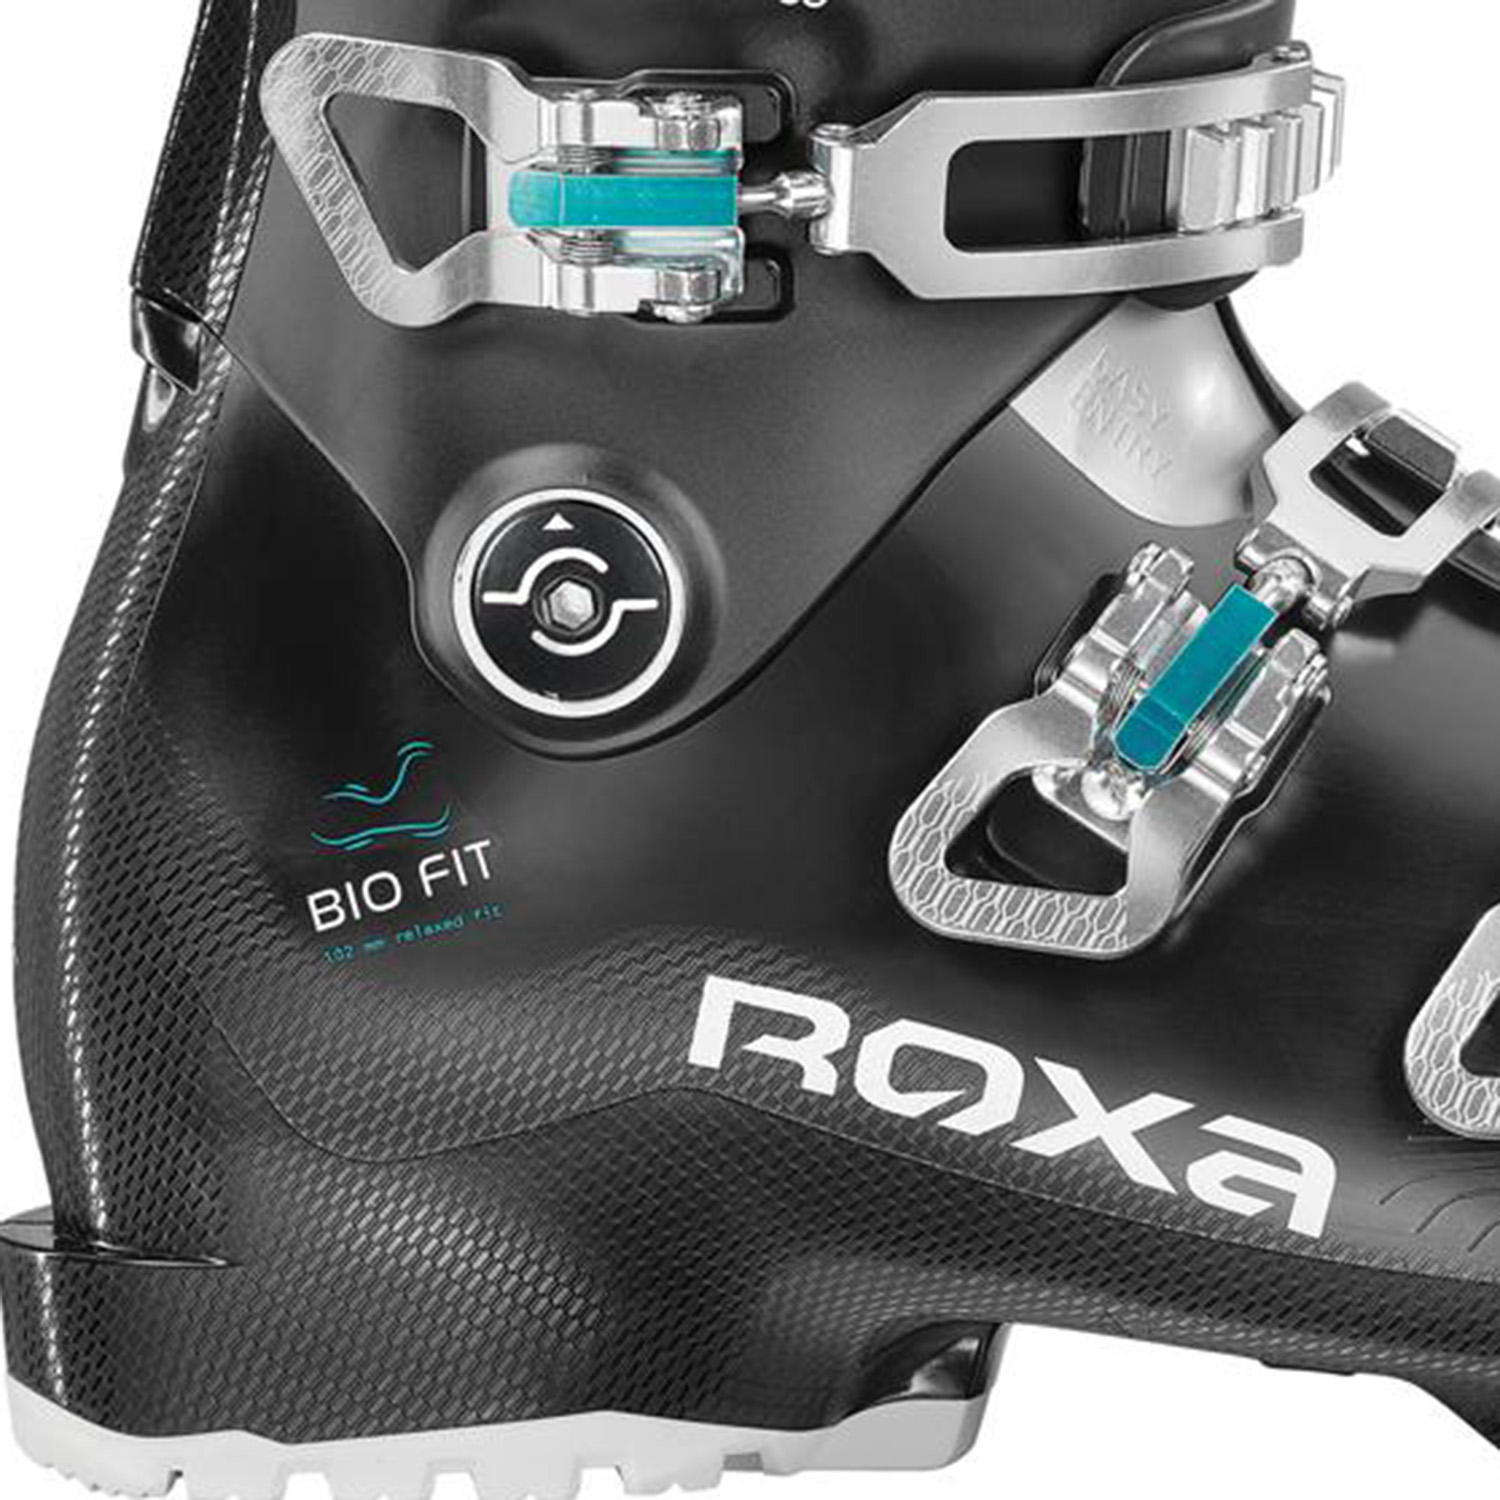 Горнолыжные ботинки ROXA R-FIT W 75 Black/Black